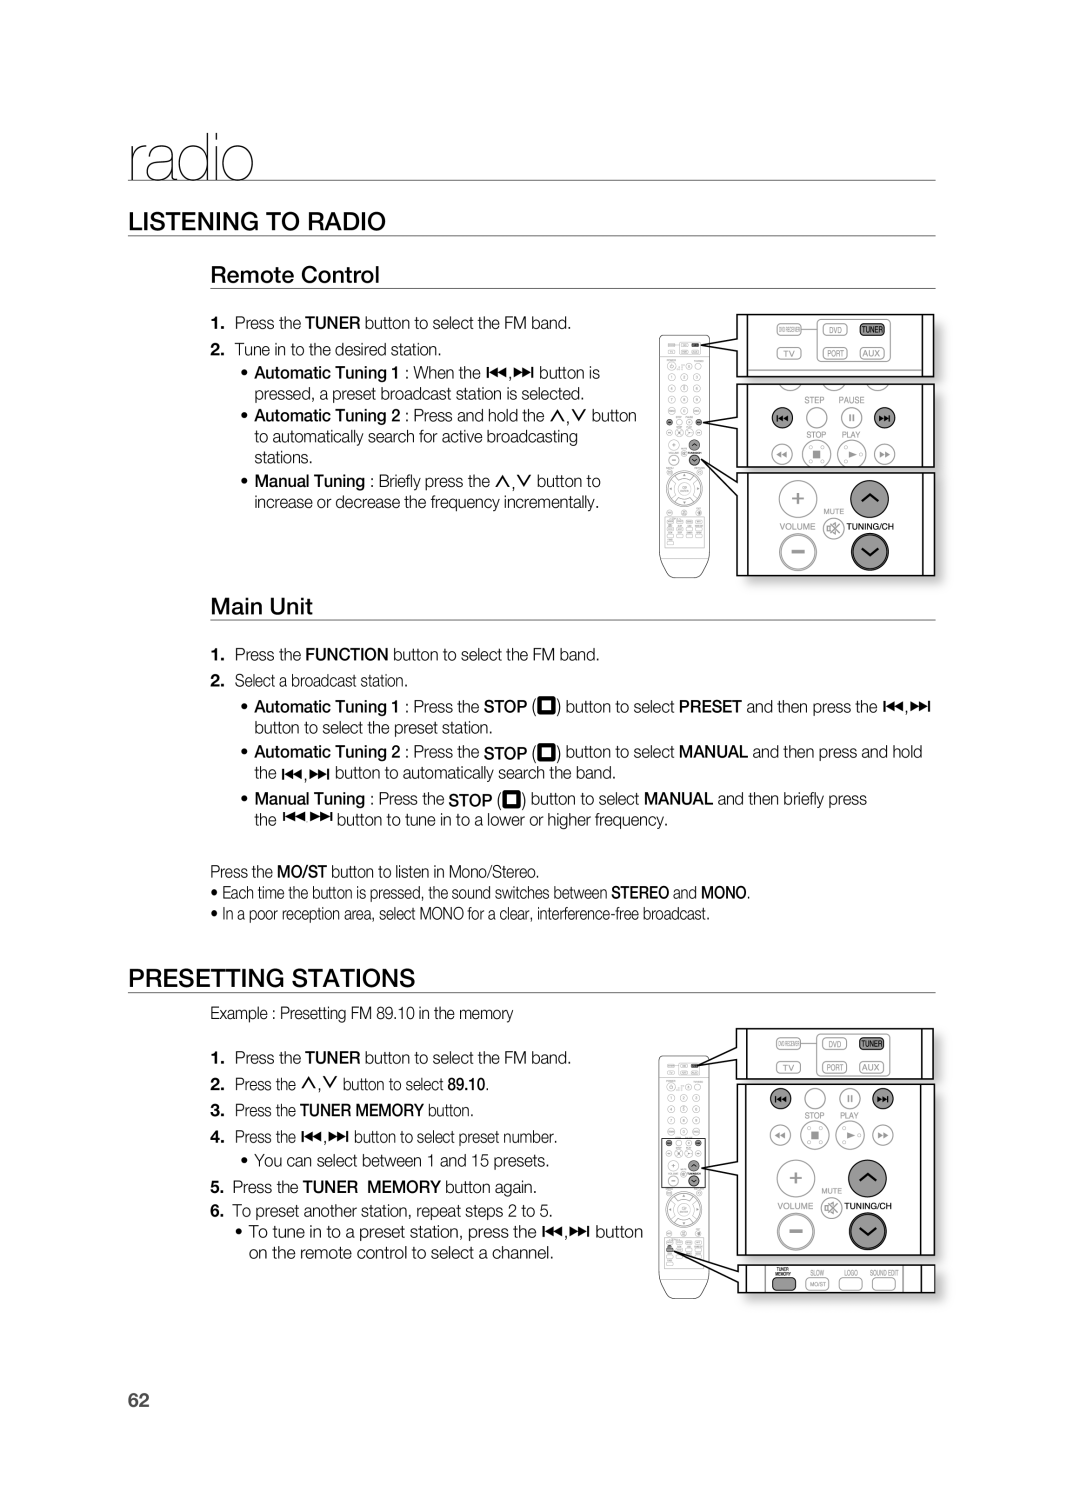 Samsung HT-TZ312 manual radio, LiStEninG tO raDiO, PrESEttinG StatiOnS, remote Control, main Unit 